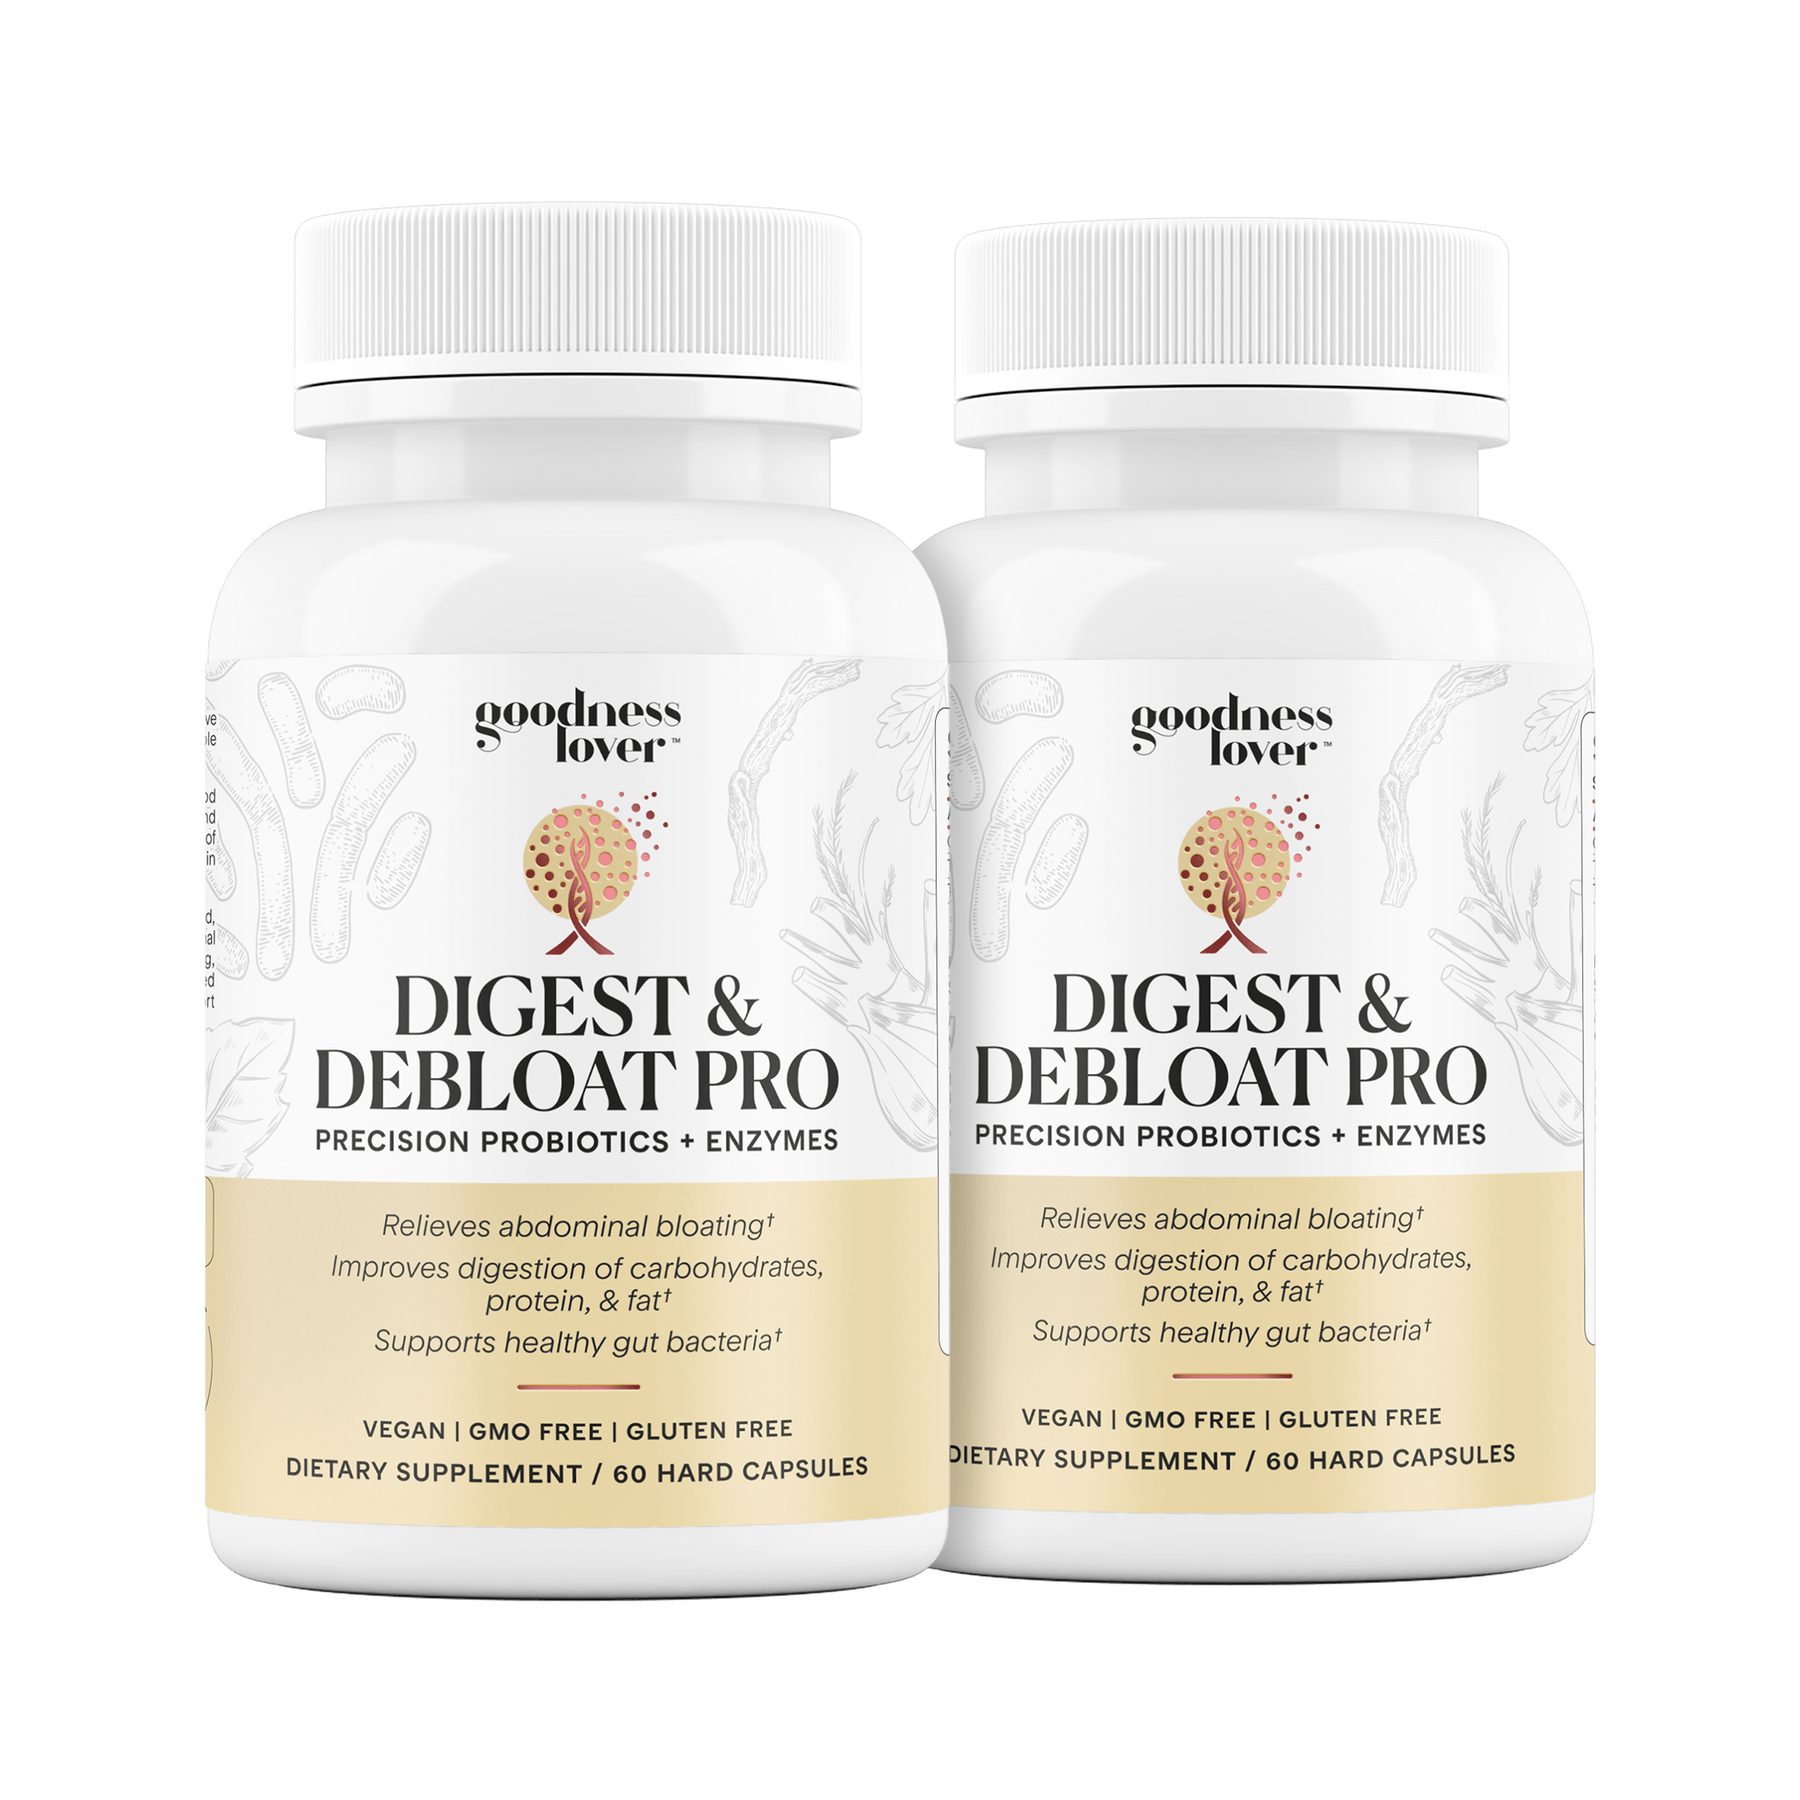 Digest & Debloat Pro